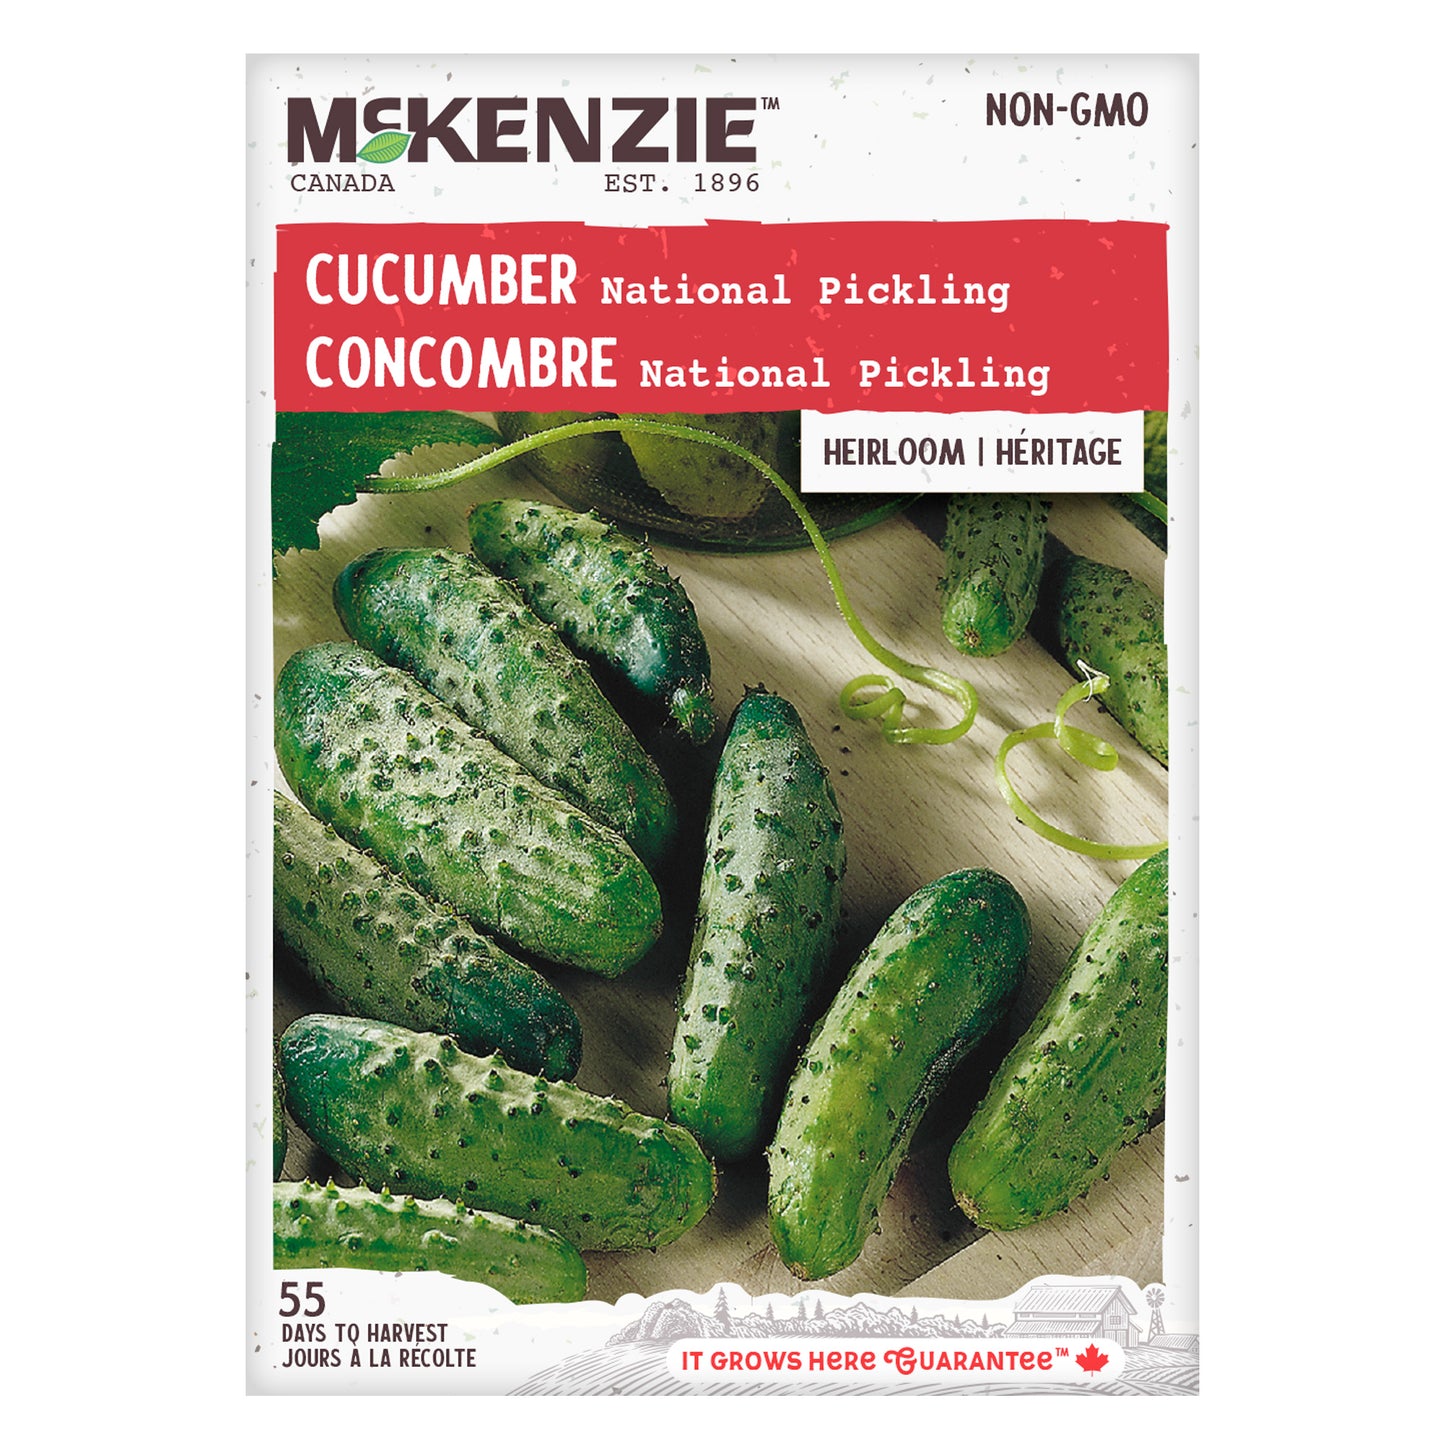 Cucumber Seeds, National Pickling